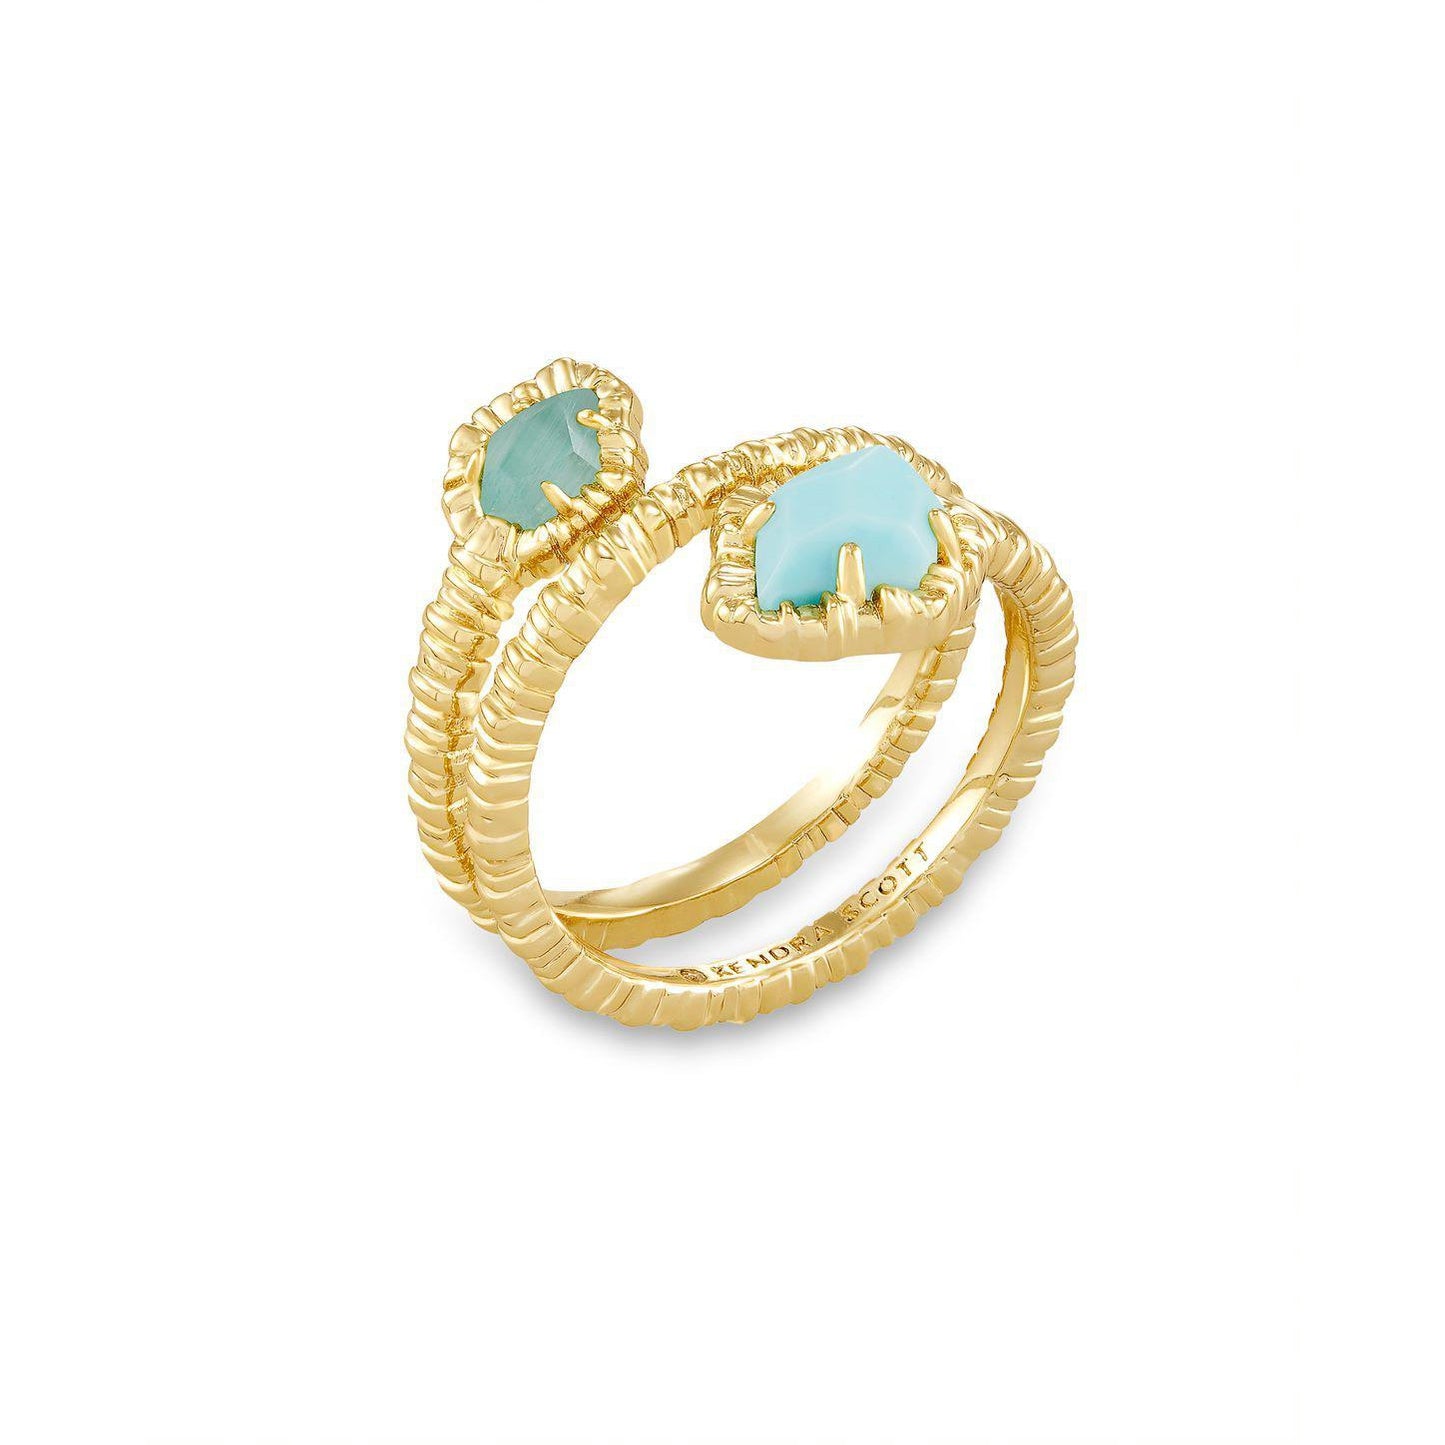 Spring 3 - Tessa Wrap Ring in Gold Light blue Magnesite